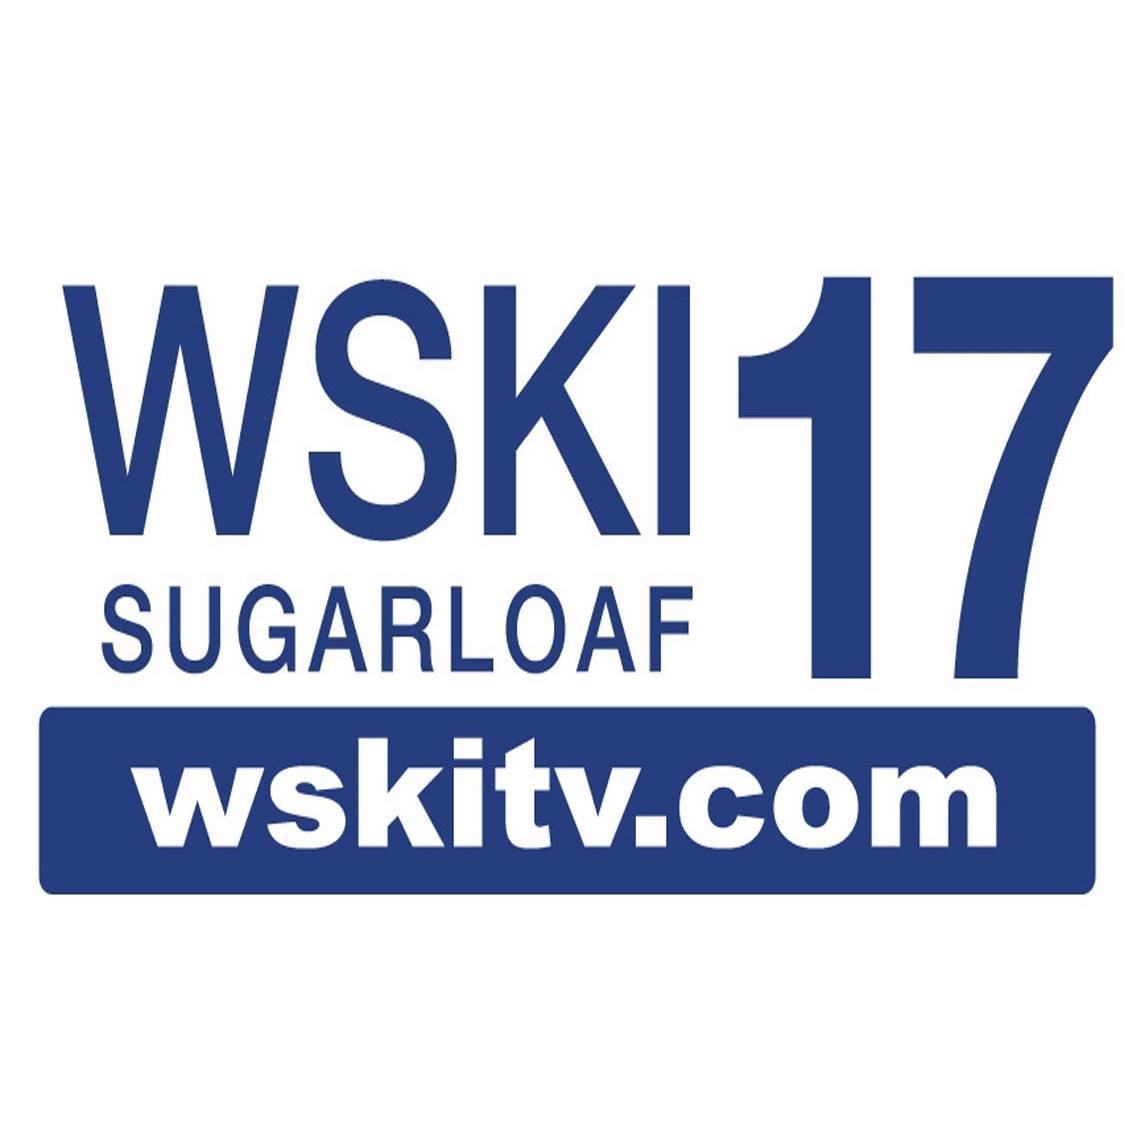 WSKI TV 17 logo and name